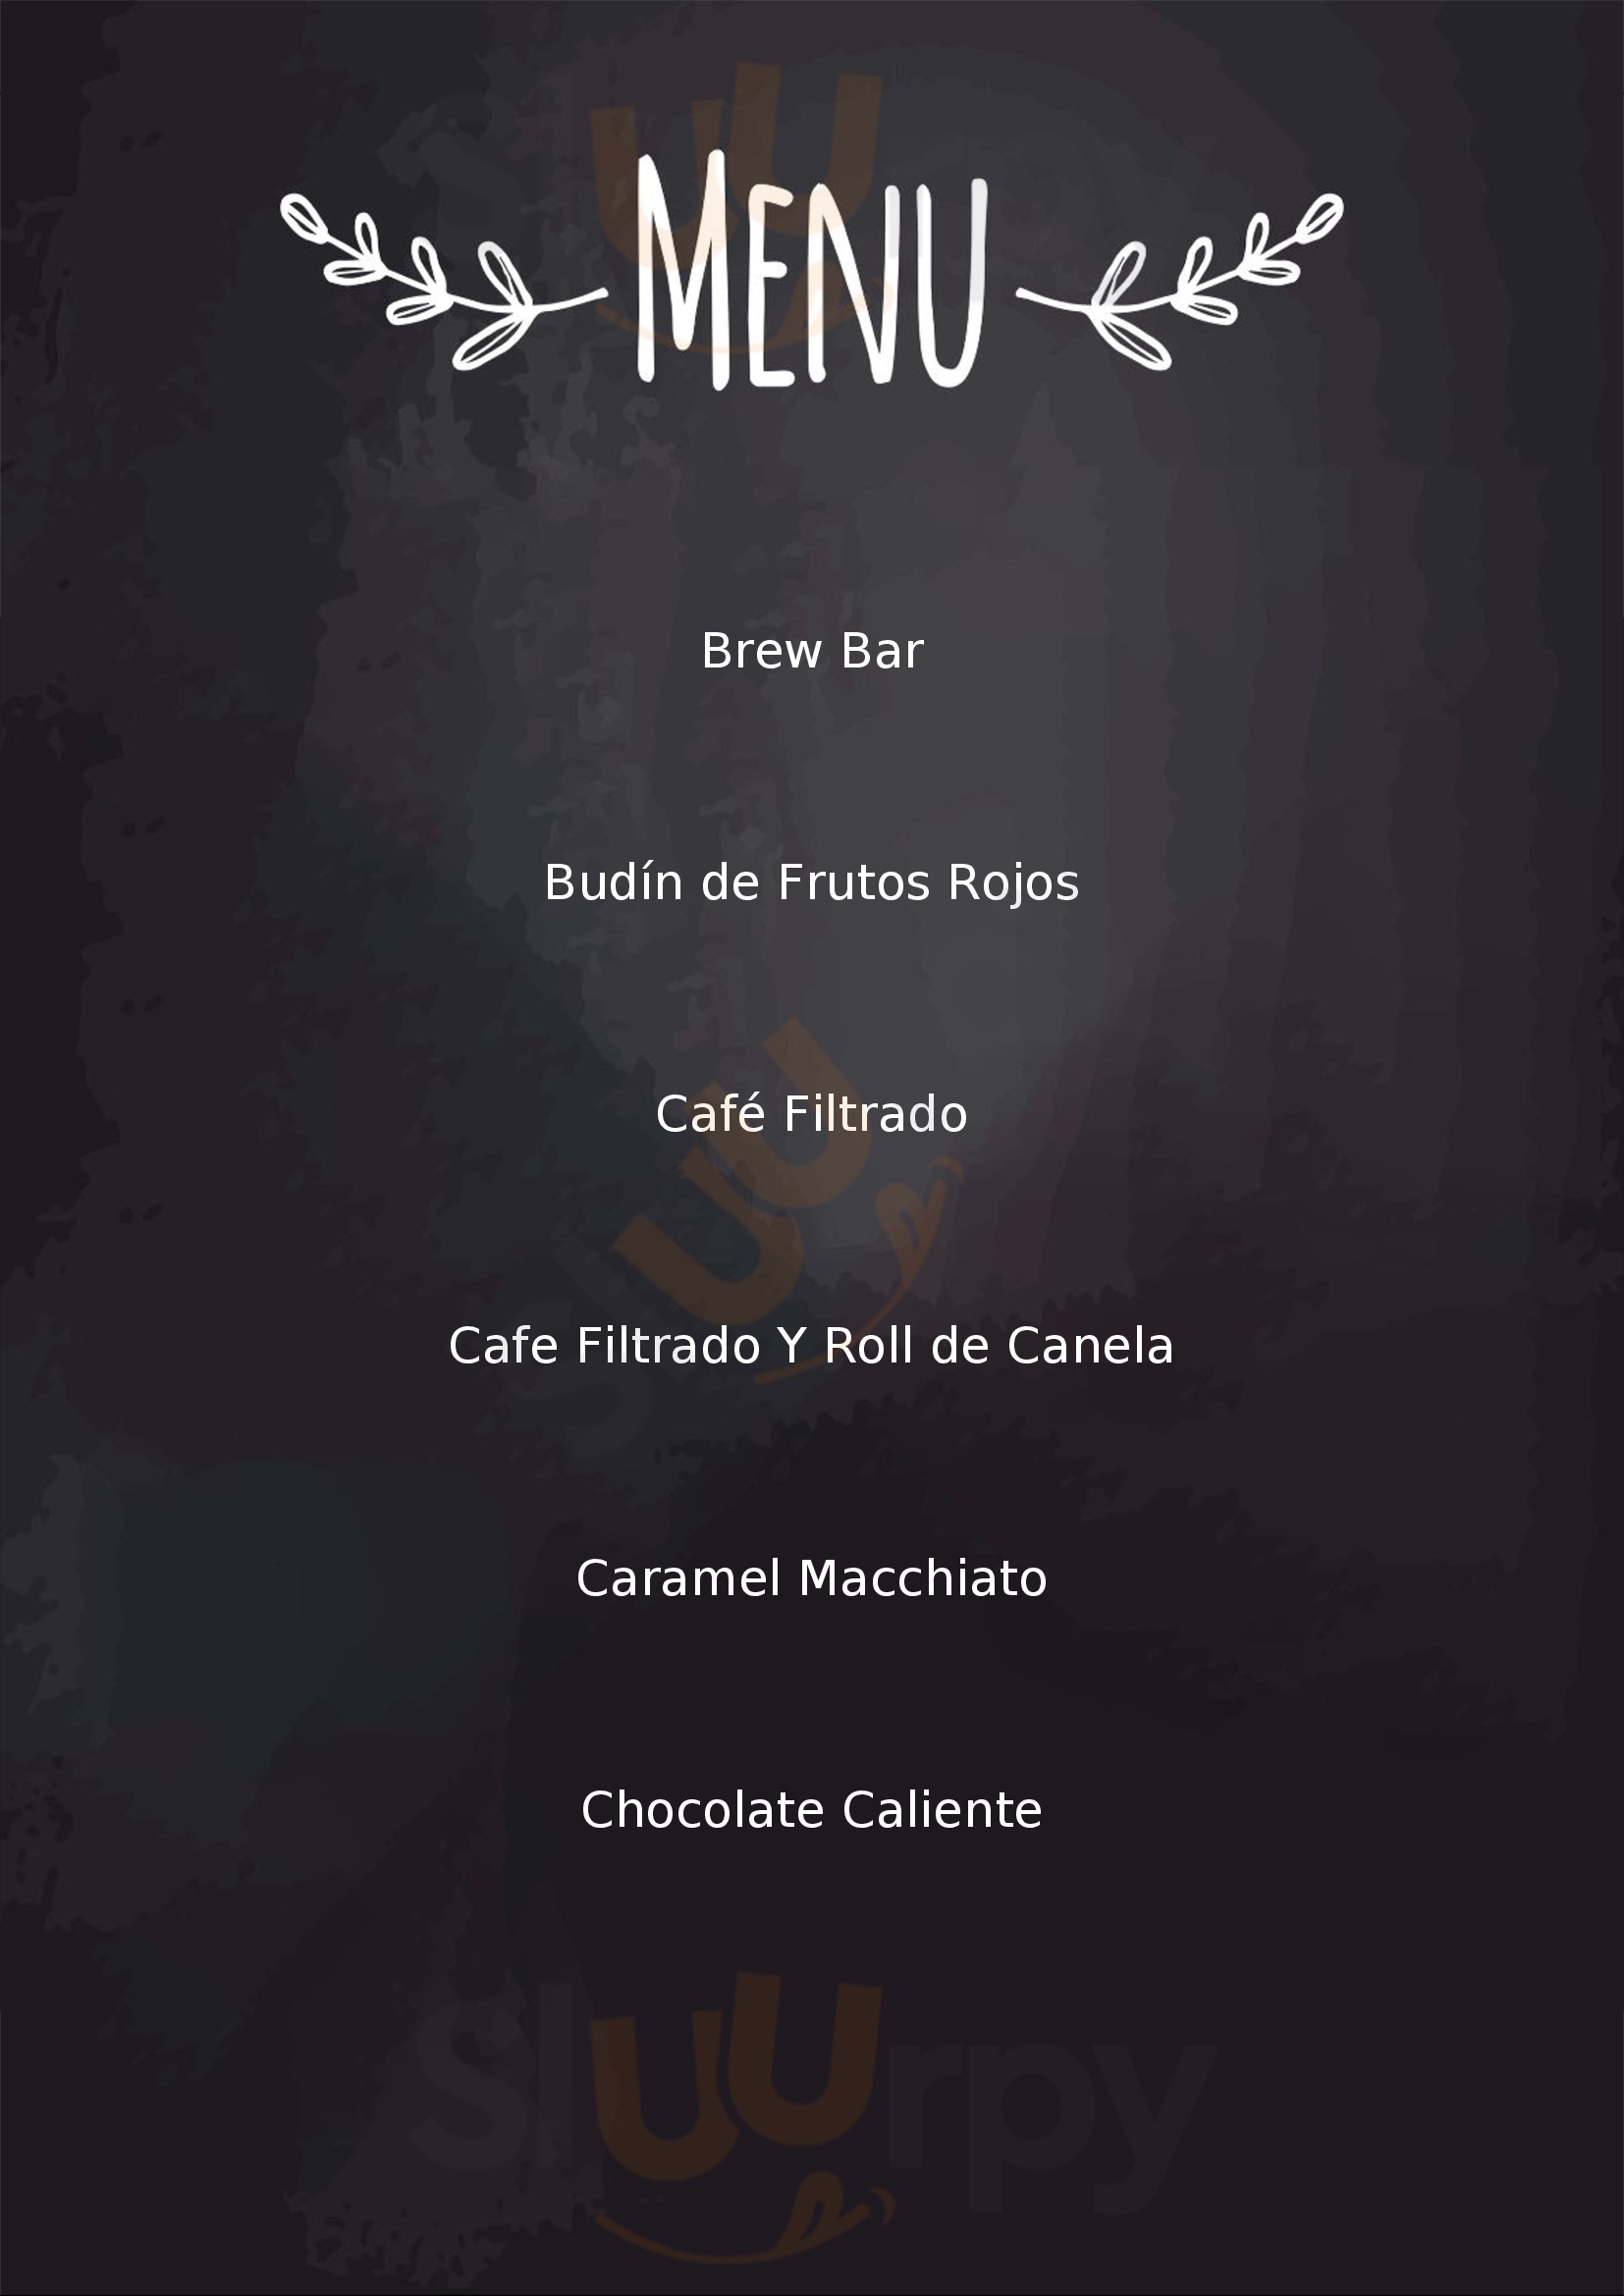 All Saints Cafe Buenos Aires Menu - 1